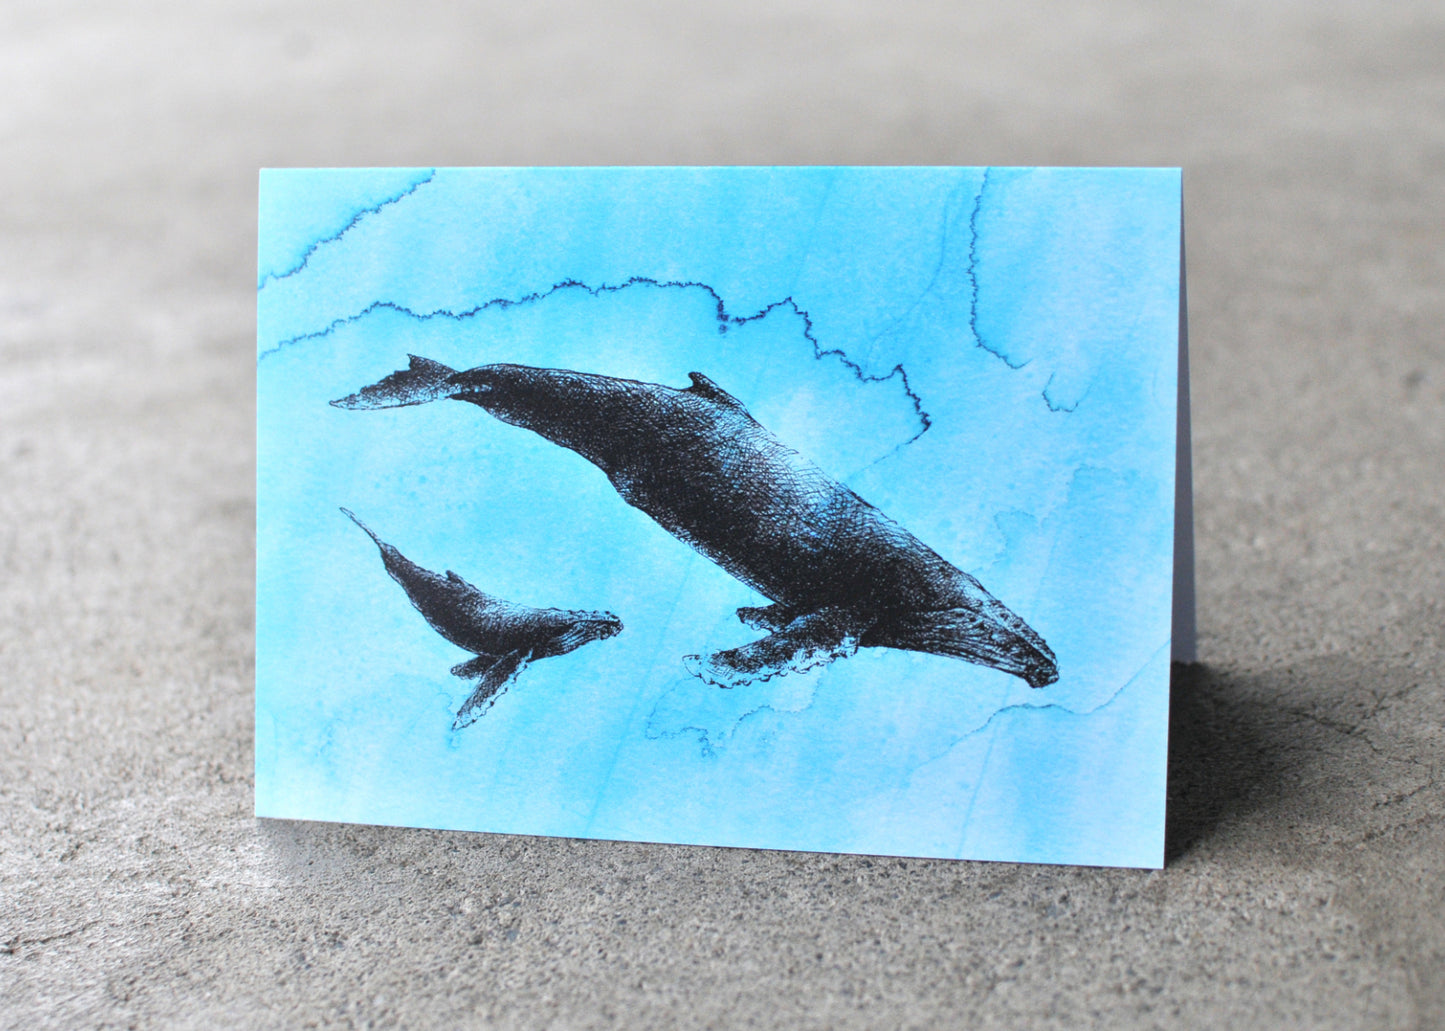 Humpback Whale Greeting Card - Ocean Series